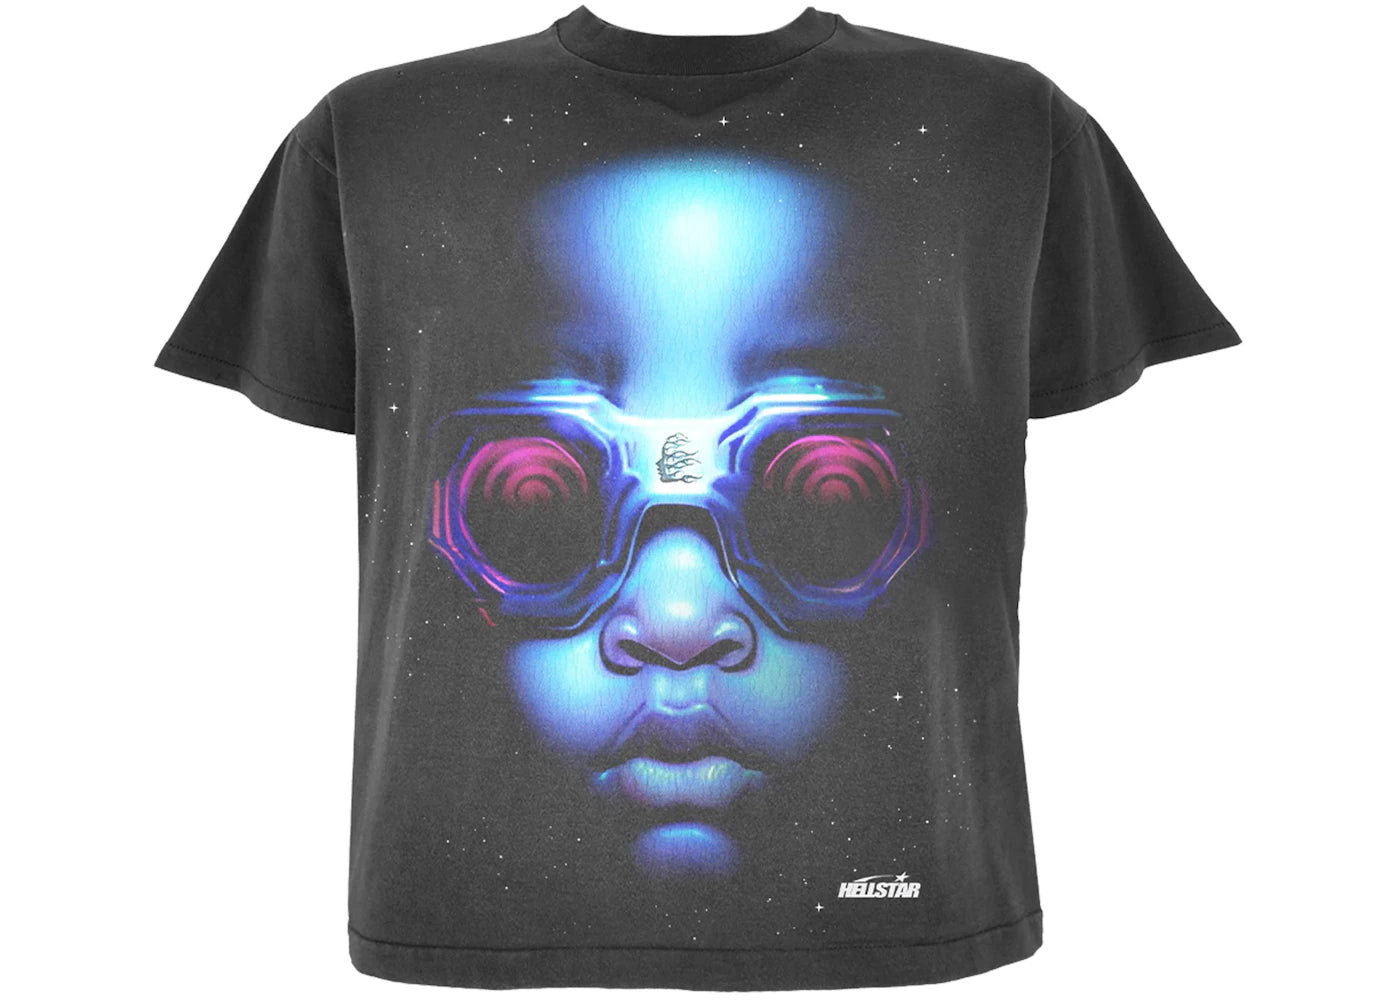 Hellstar Capsule 10 Goggles T-Shirt Black